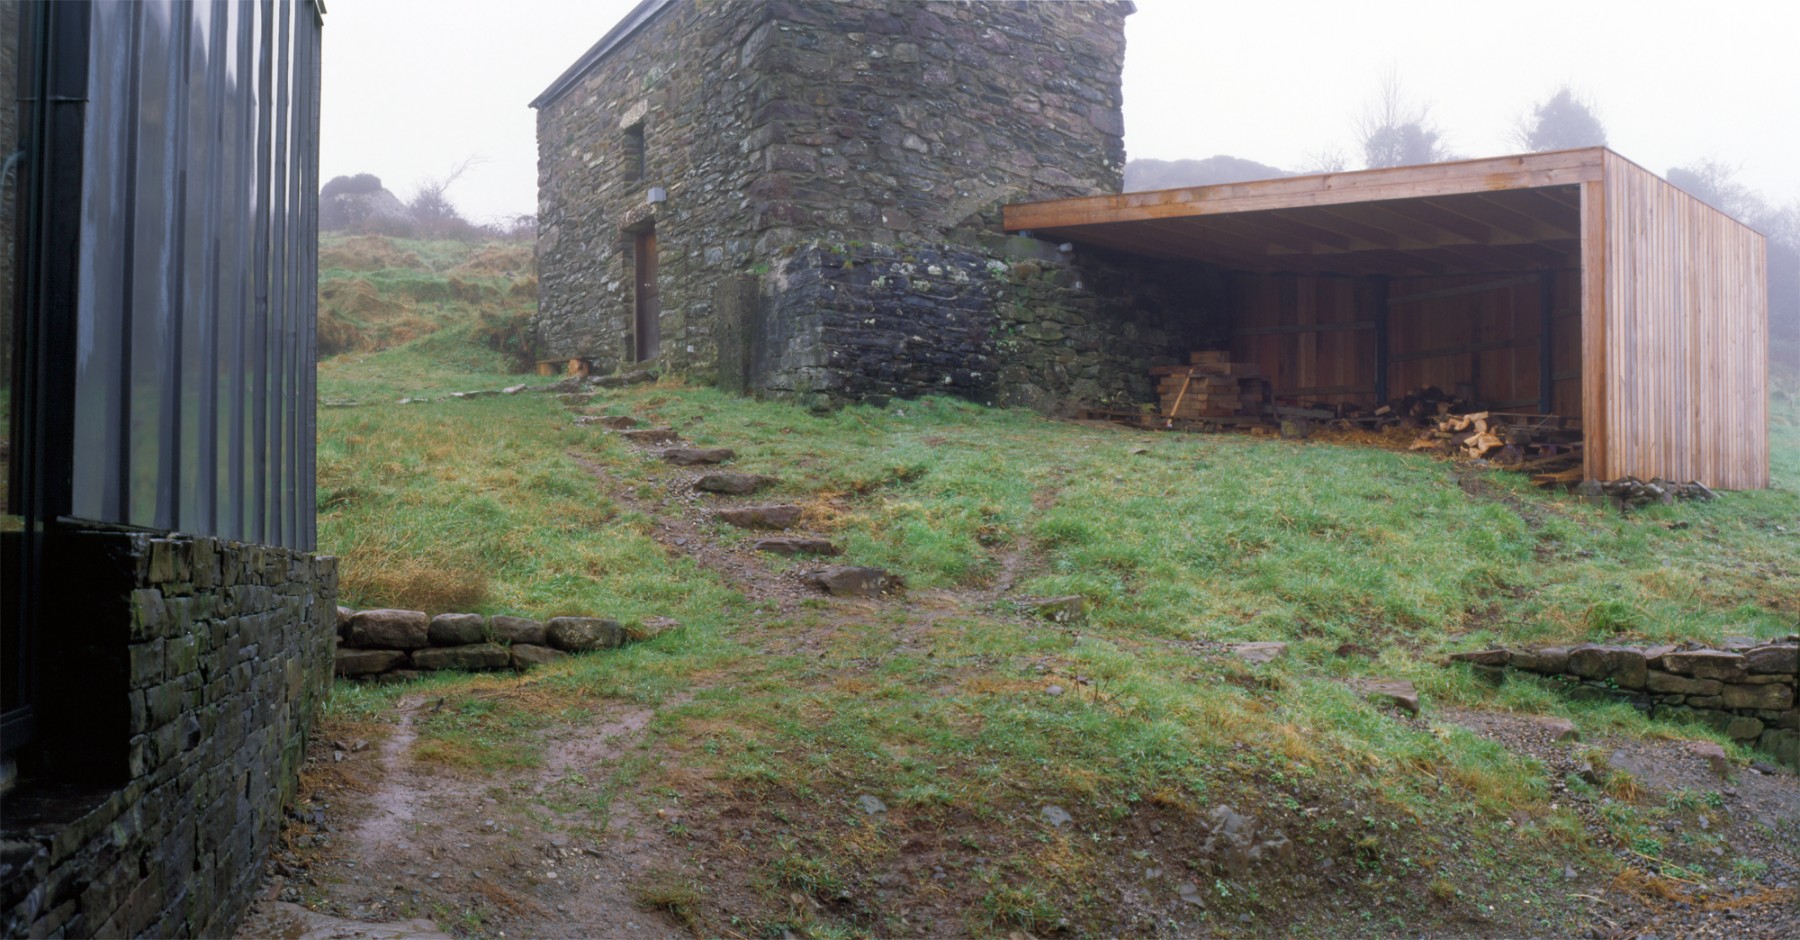 FaHa-Farm-house-barn-County-Clare-Ireland-residential-home-rural-timber-zinc-Jamie-Fobert-Architects-9